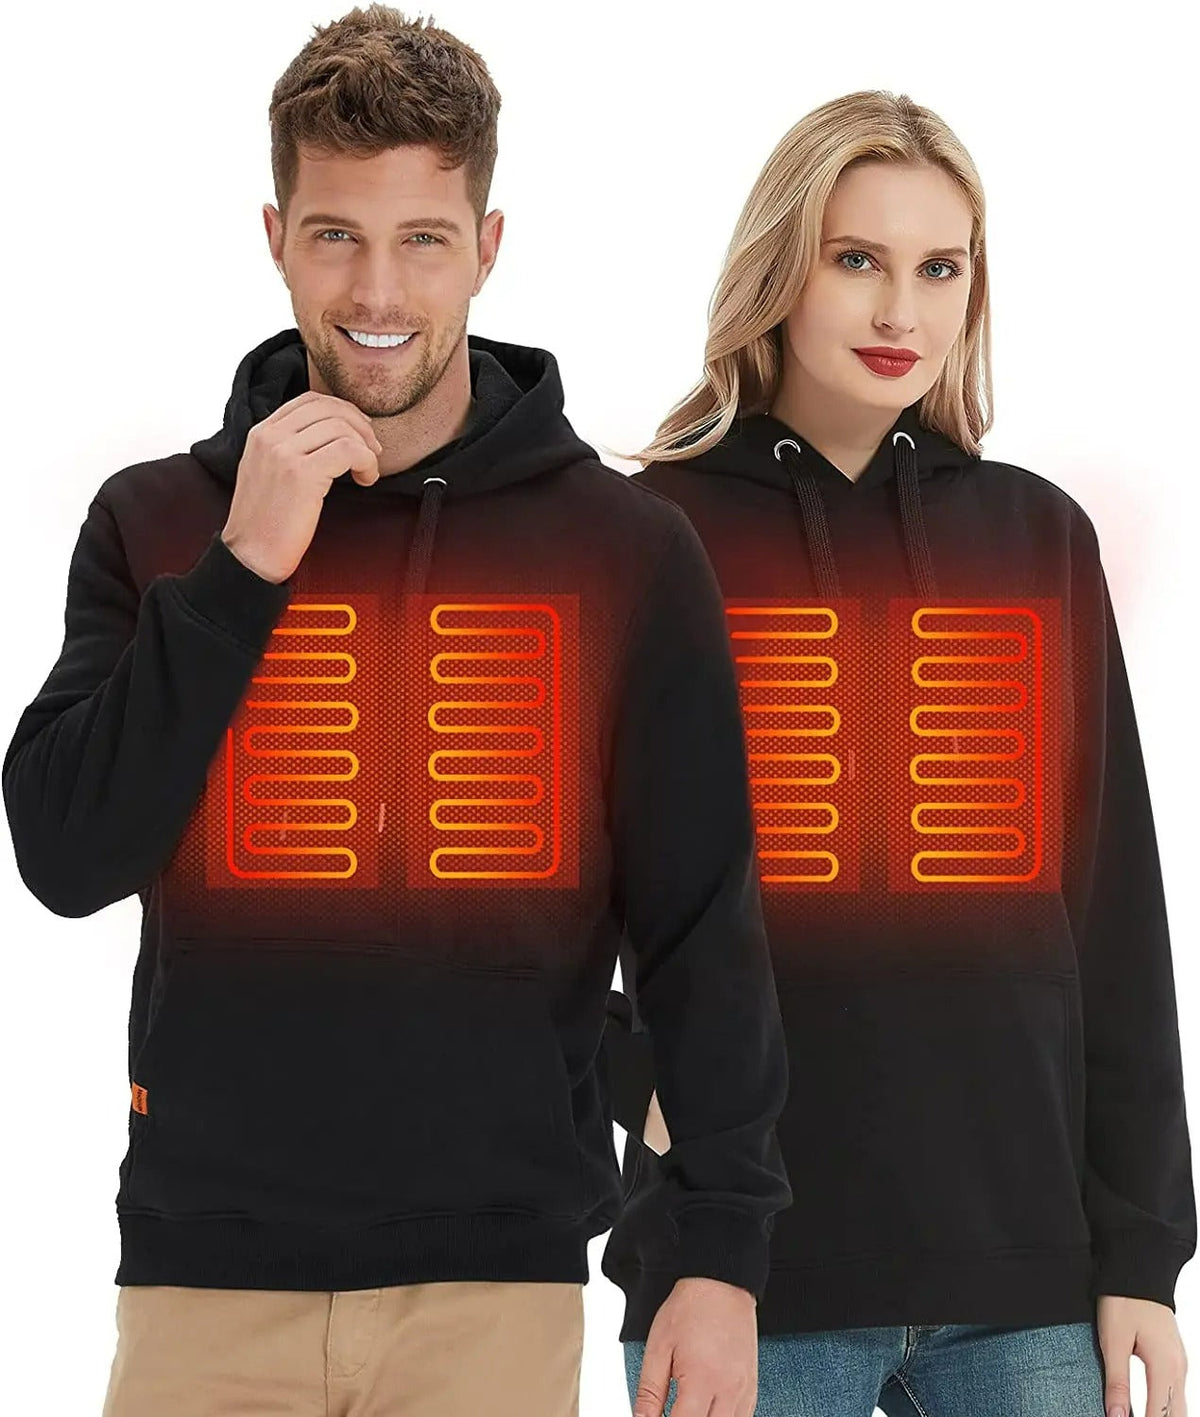 Heated Hoodie for Men Women Unisex Heating Sweatshirt Winter Gifts For Lover Friends